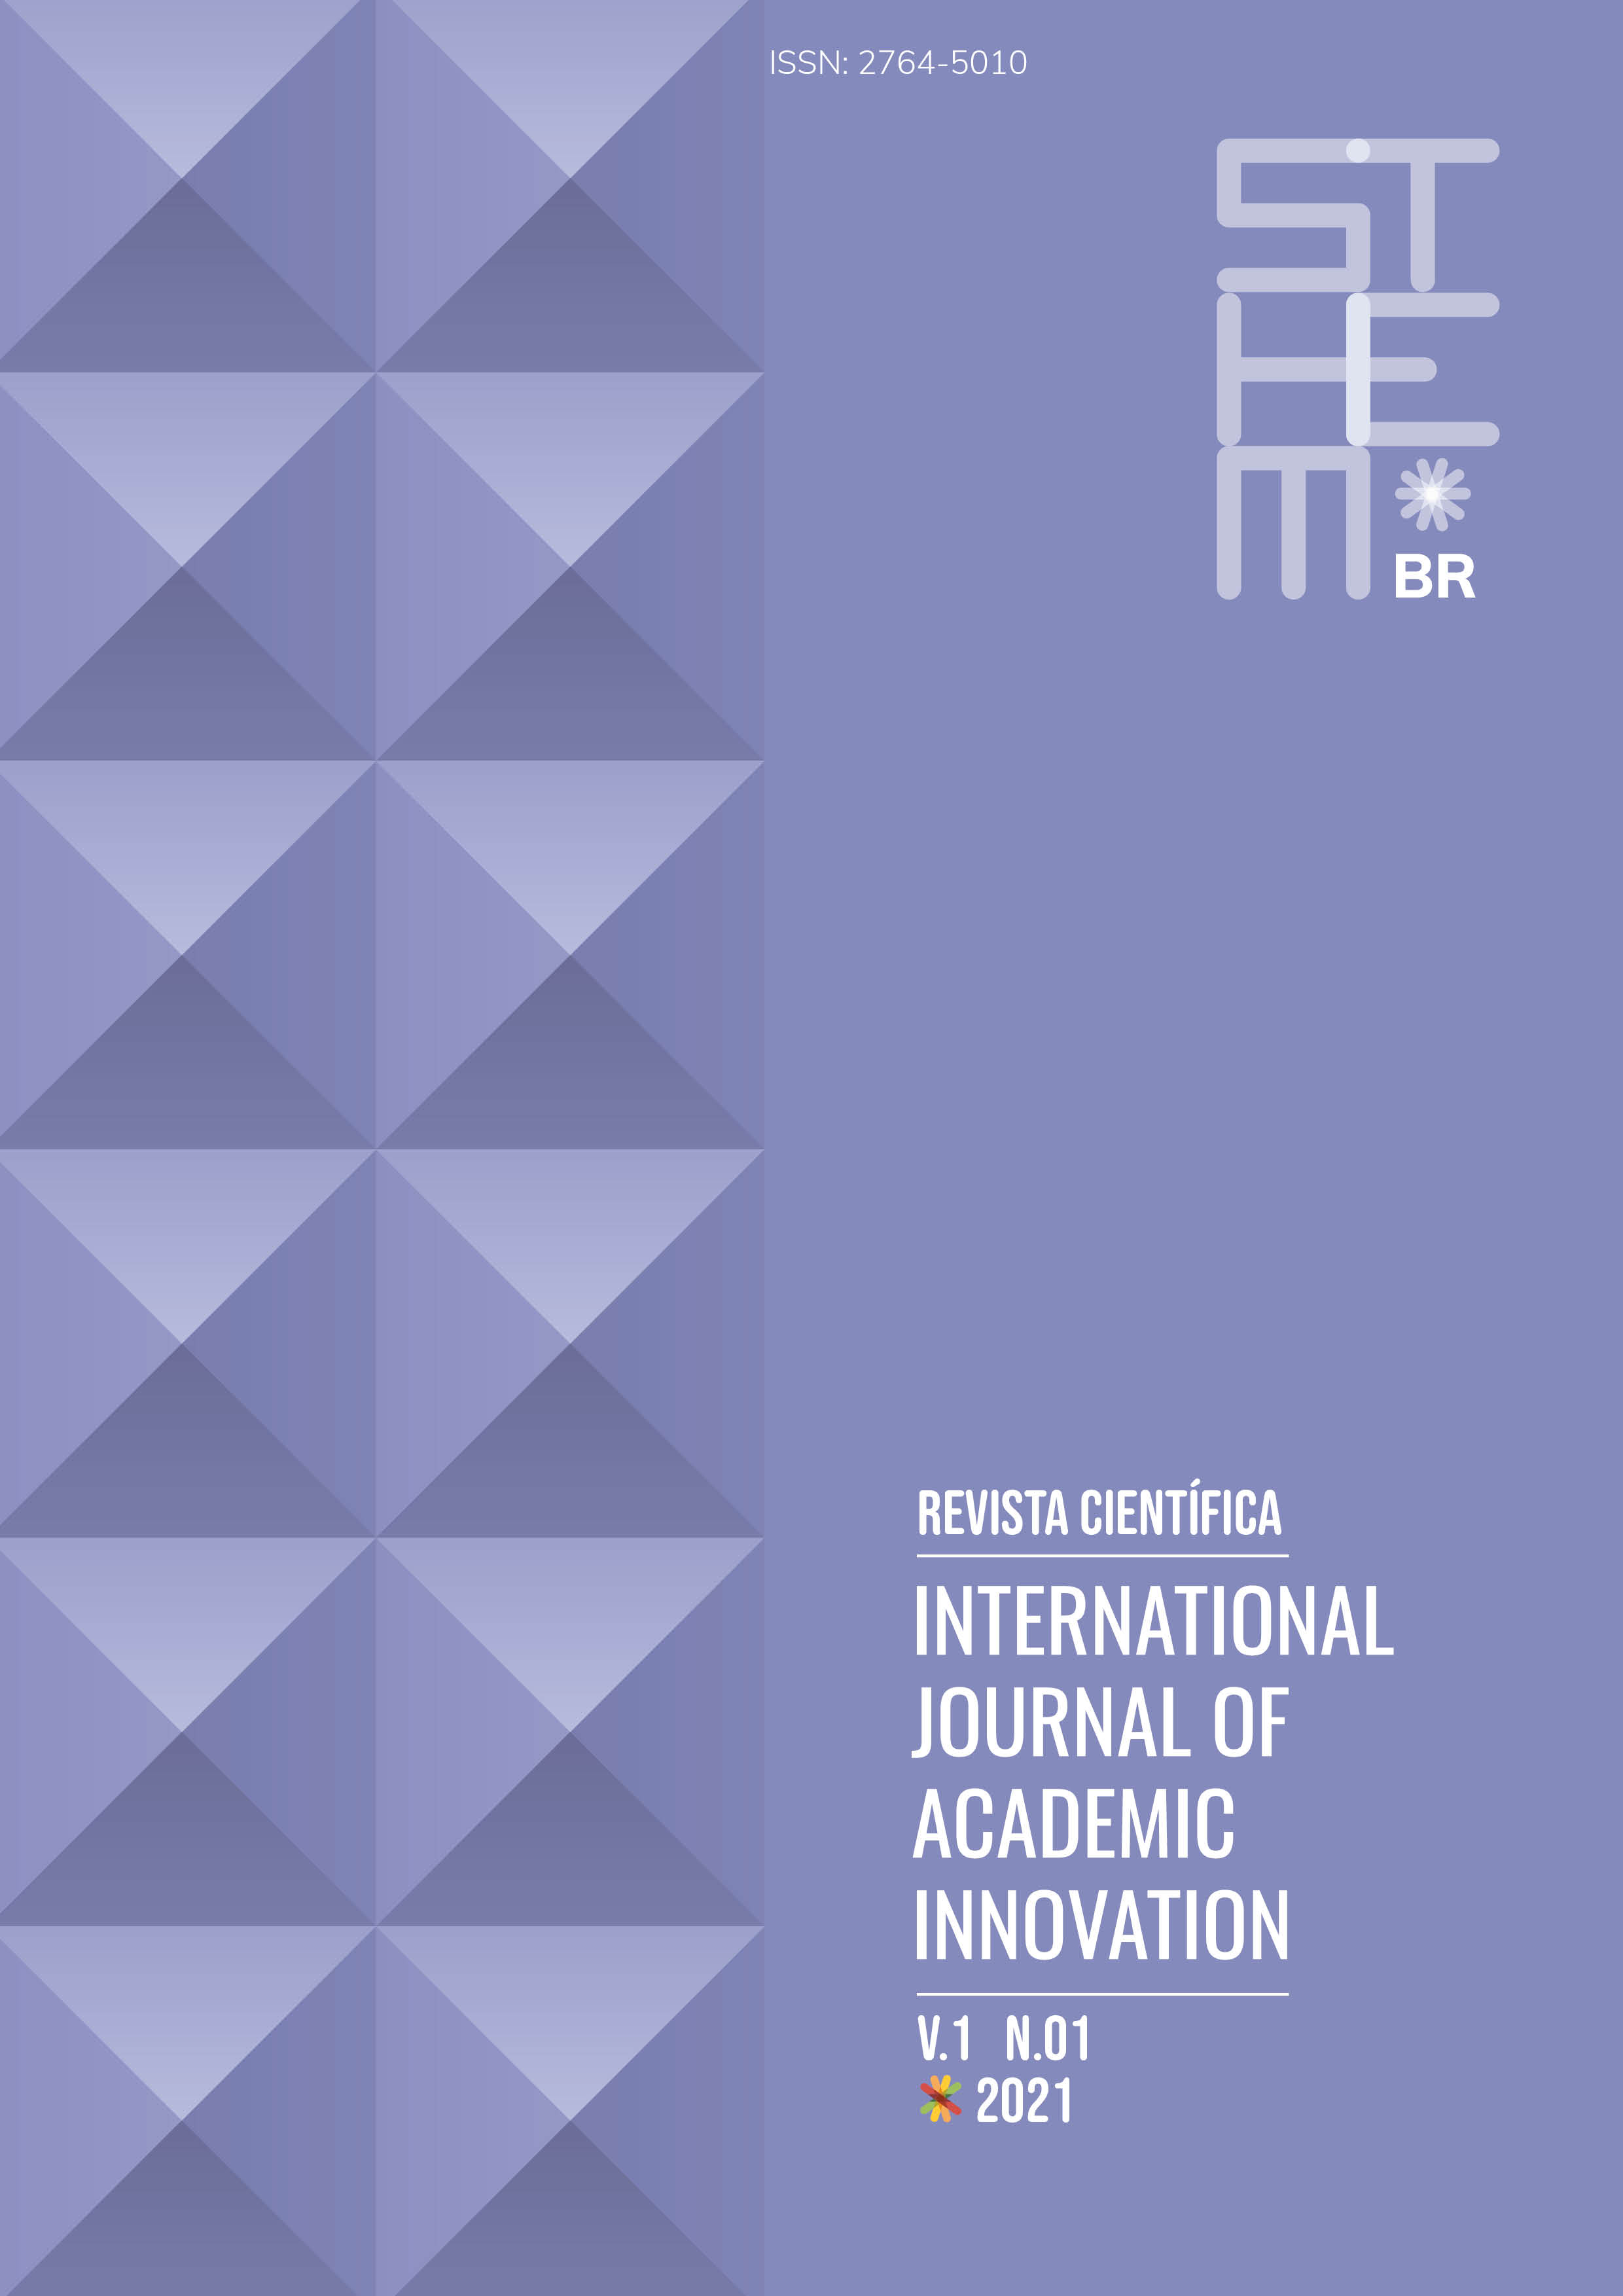 					Visualizar v. 1 n. 1 (2021): International Journal of Academic Innovation
				